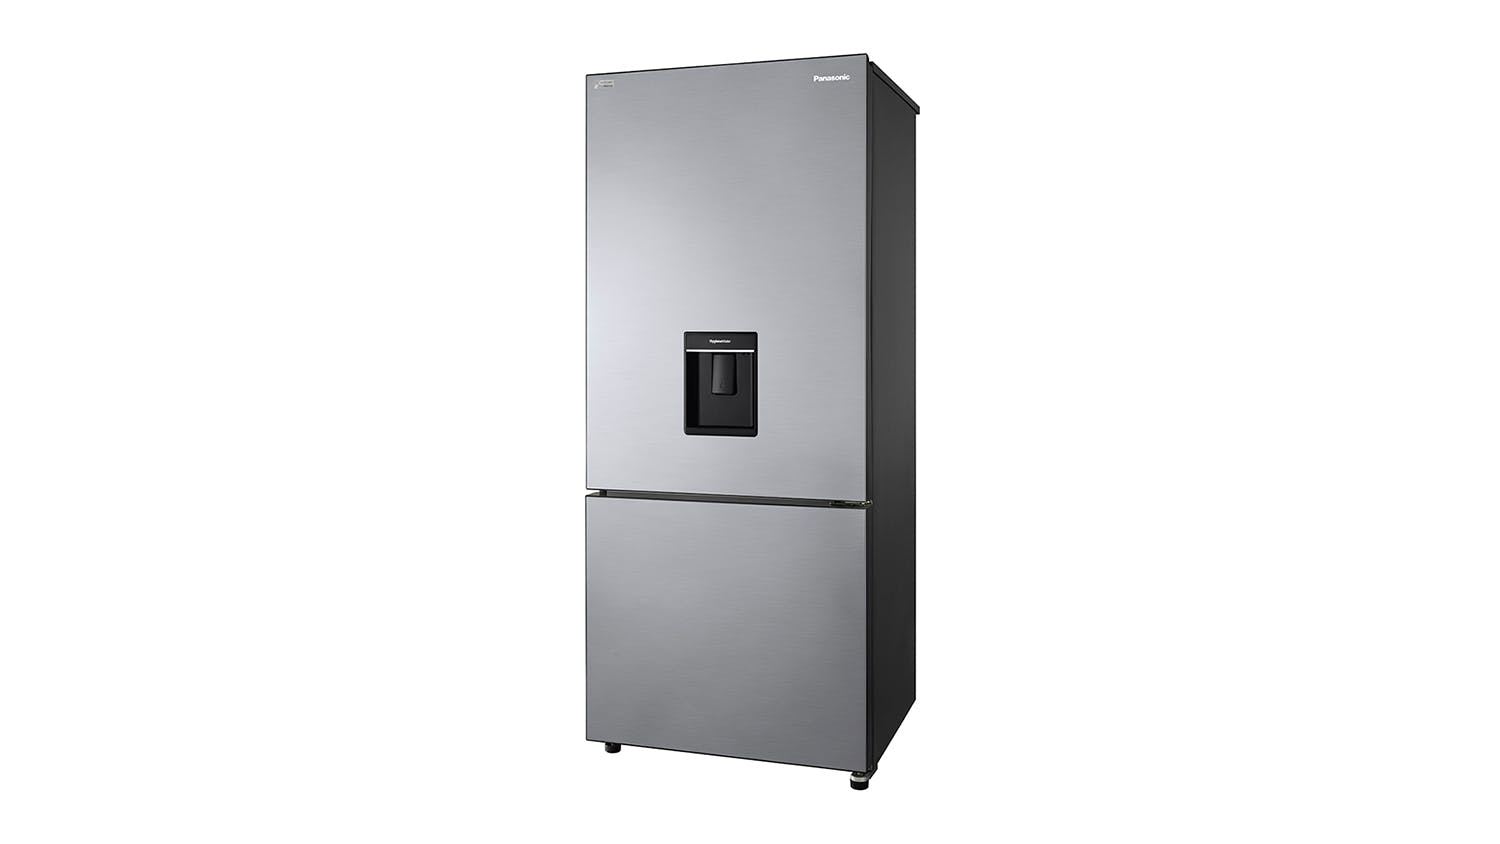 Panasonic 377L Bottom Mount Fridge Freezer with Water Dispenser - Stainless Steel (NR-BX421GUSA)